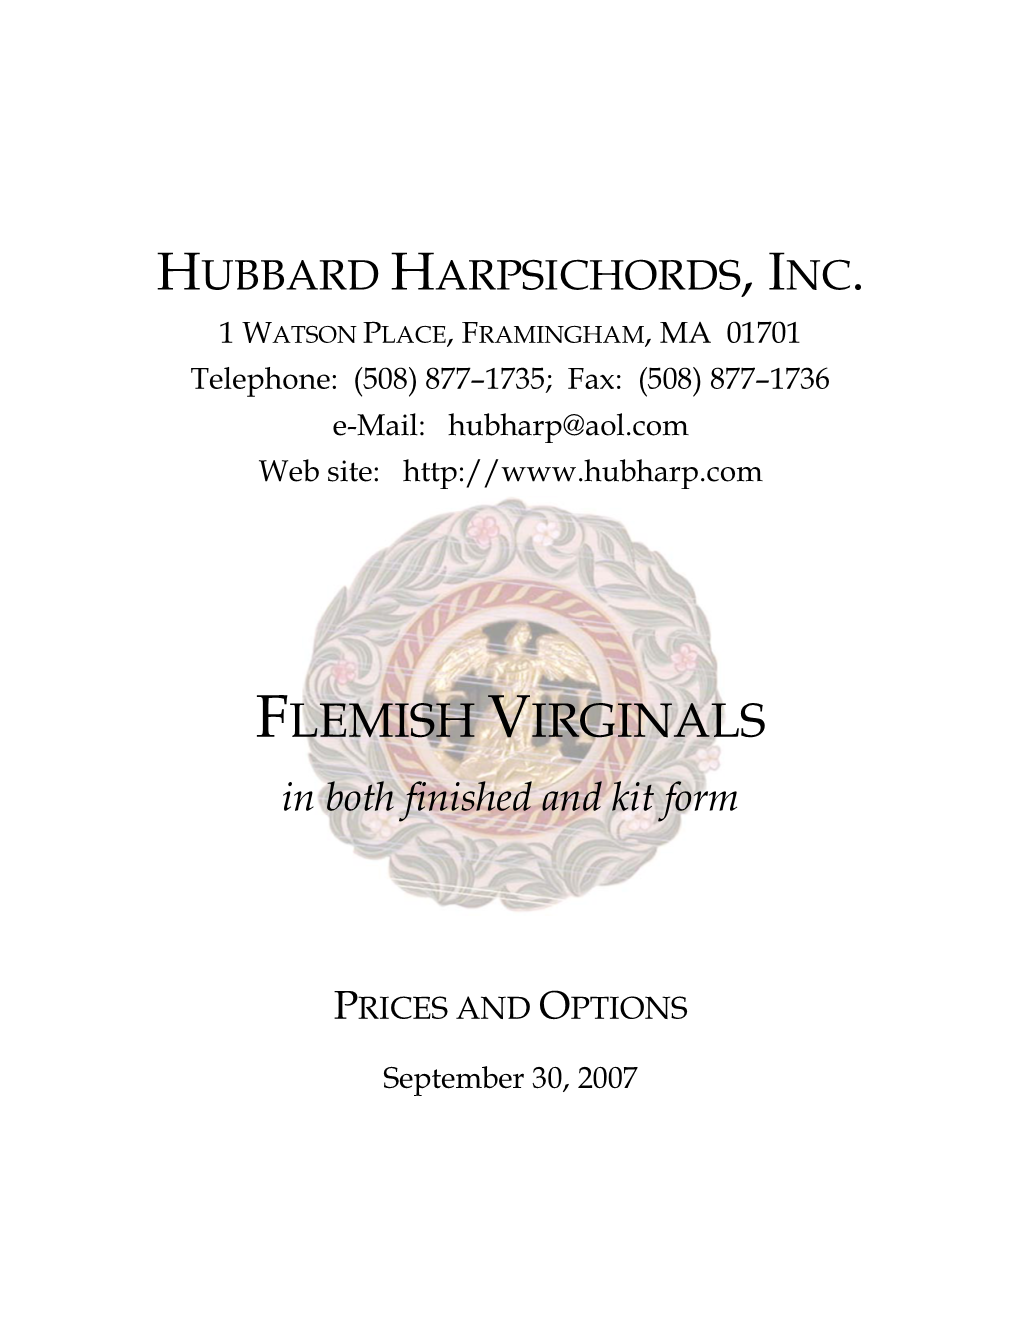 Hubbard Harpsichords, Inc., Flemish Virginals